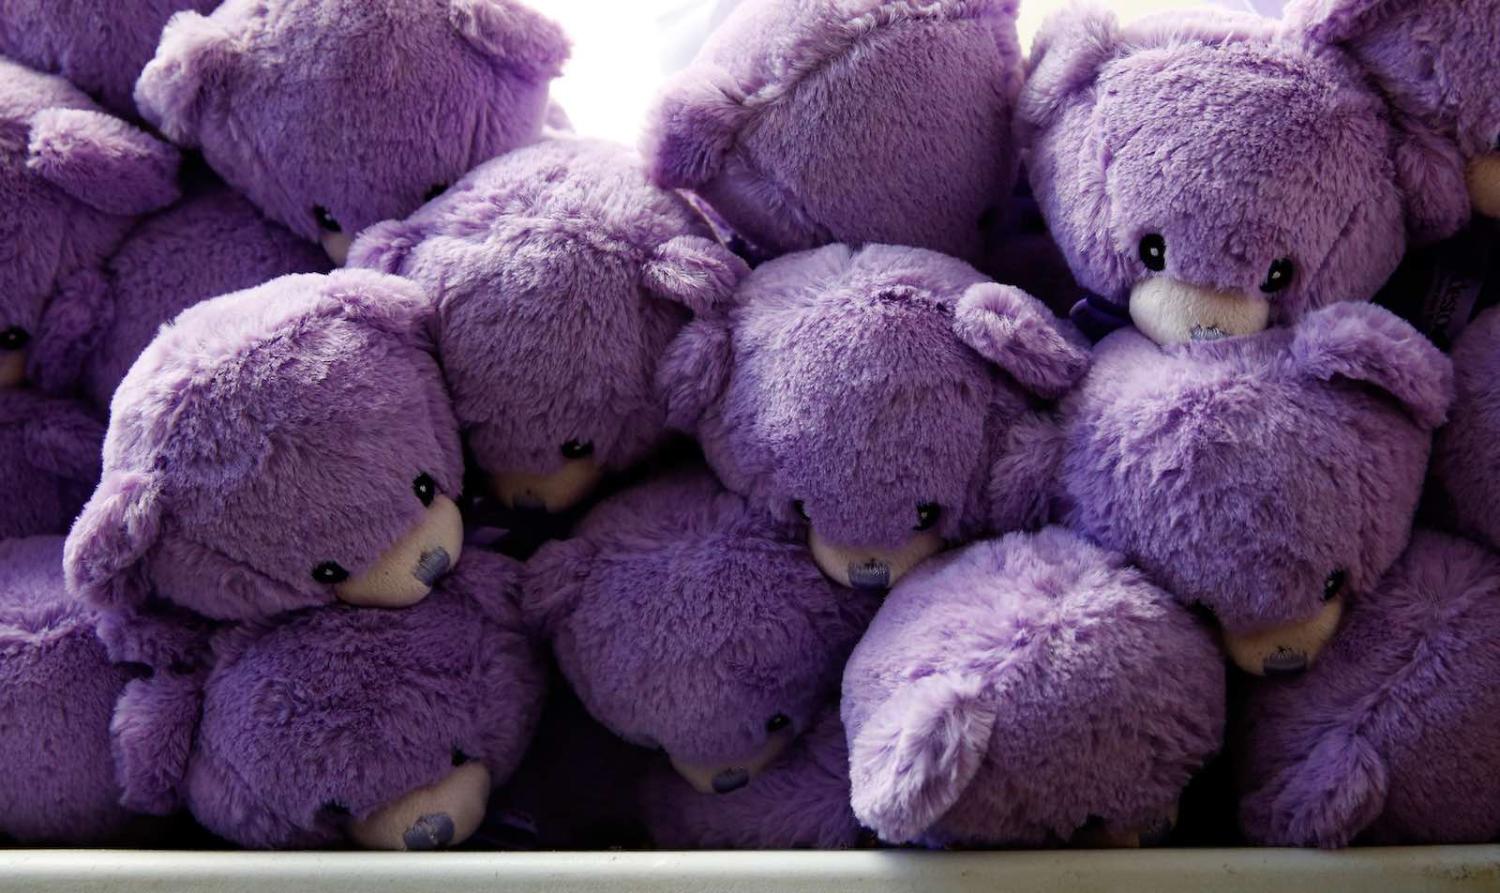 Lavender-stuffed teddy bears from Tasmania in Australia found a huge market in China (Photo: Brendon Thorne via Getty)